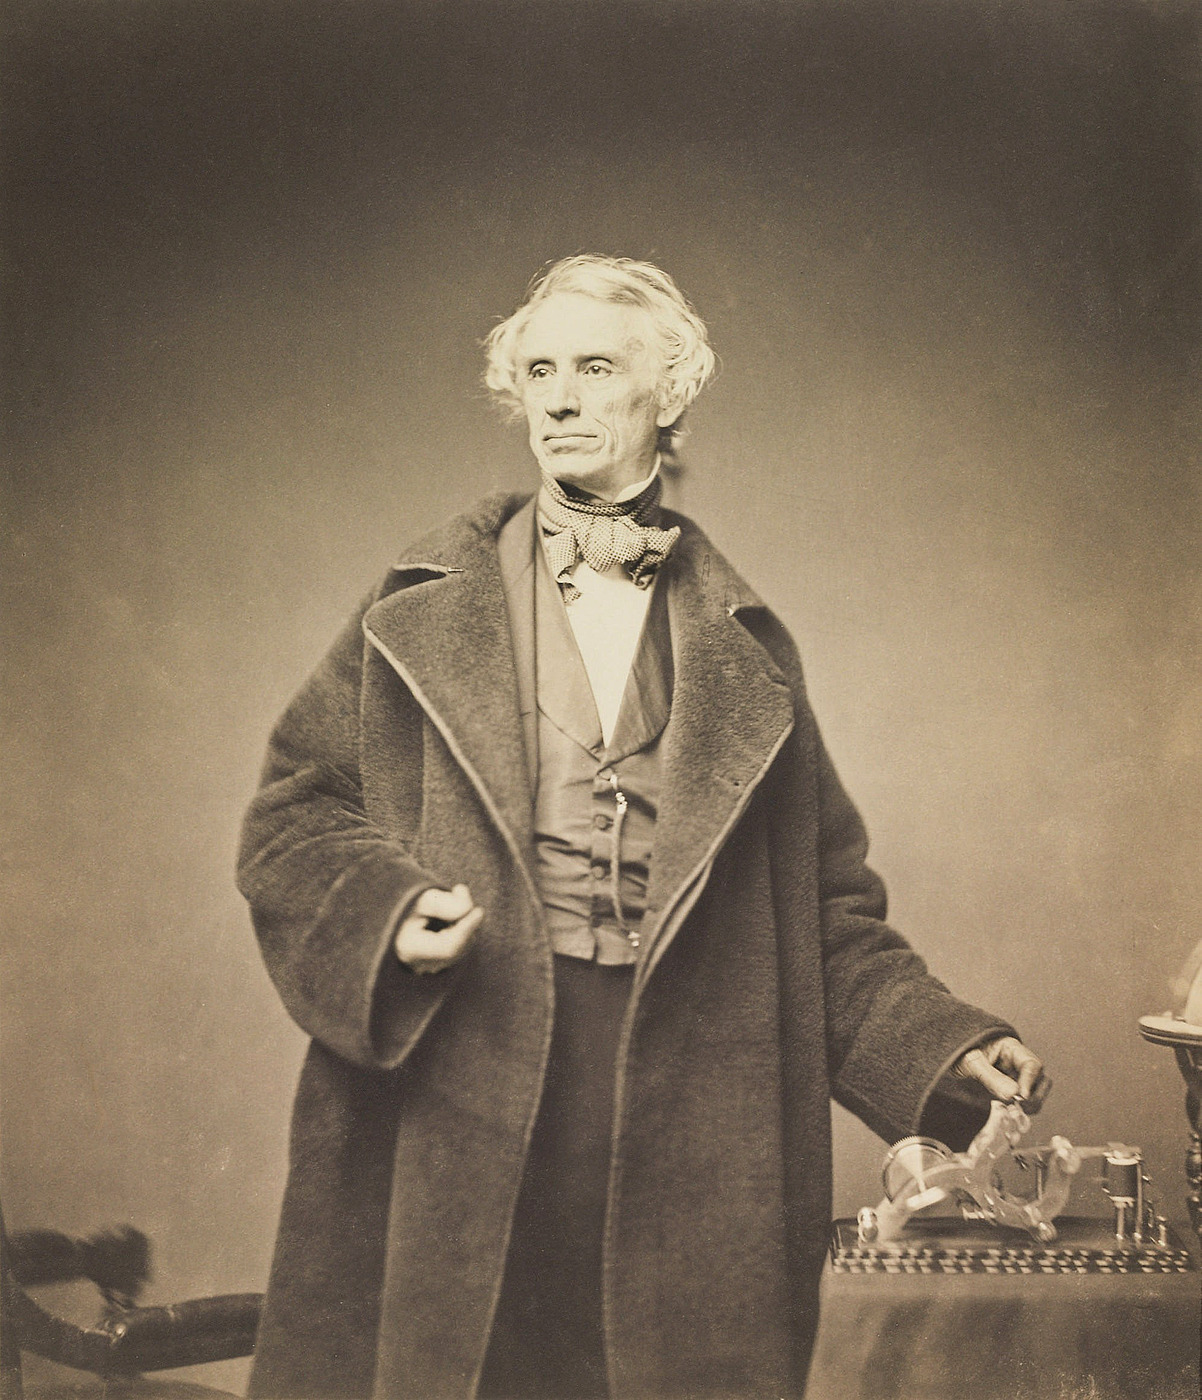 Mathew Brady: Samuel Morse with his Recorder